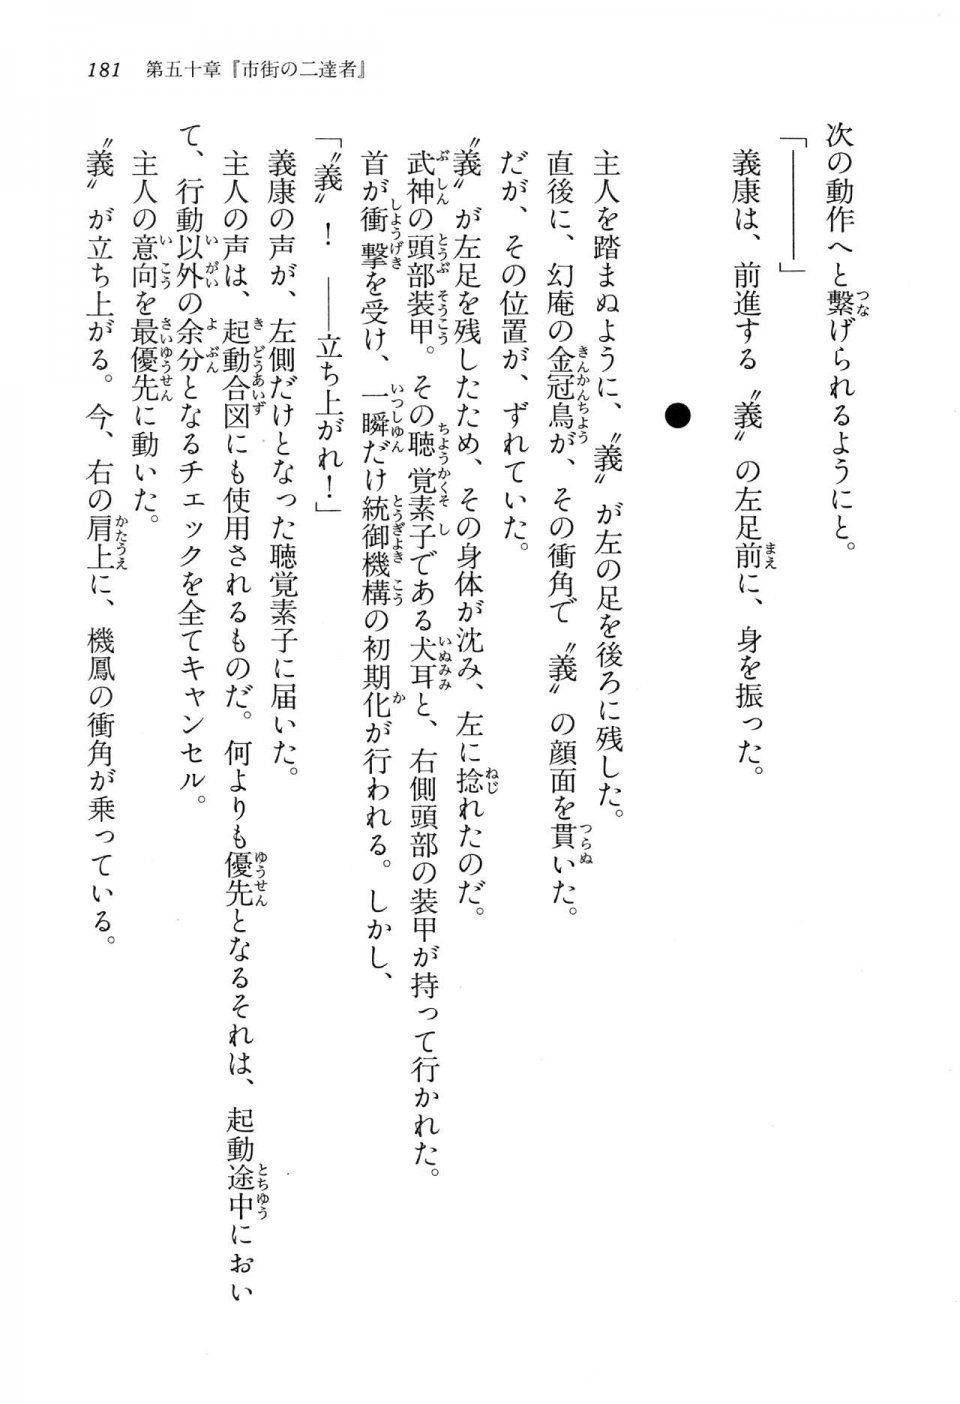 Kyoukai Senjou no Horizon LN Vol 15(6C) Part 1 - Photo #181